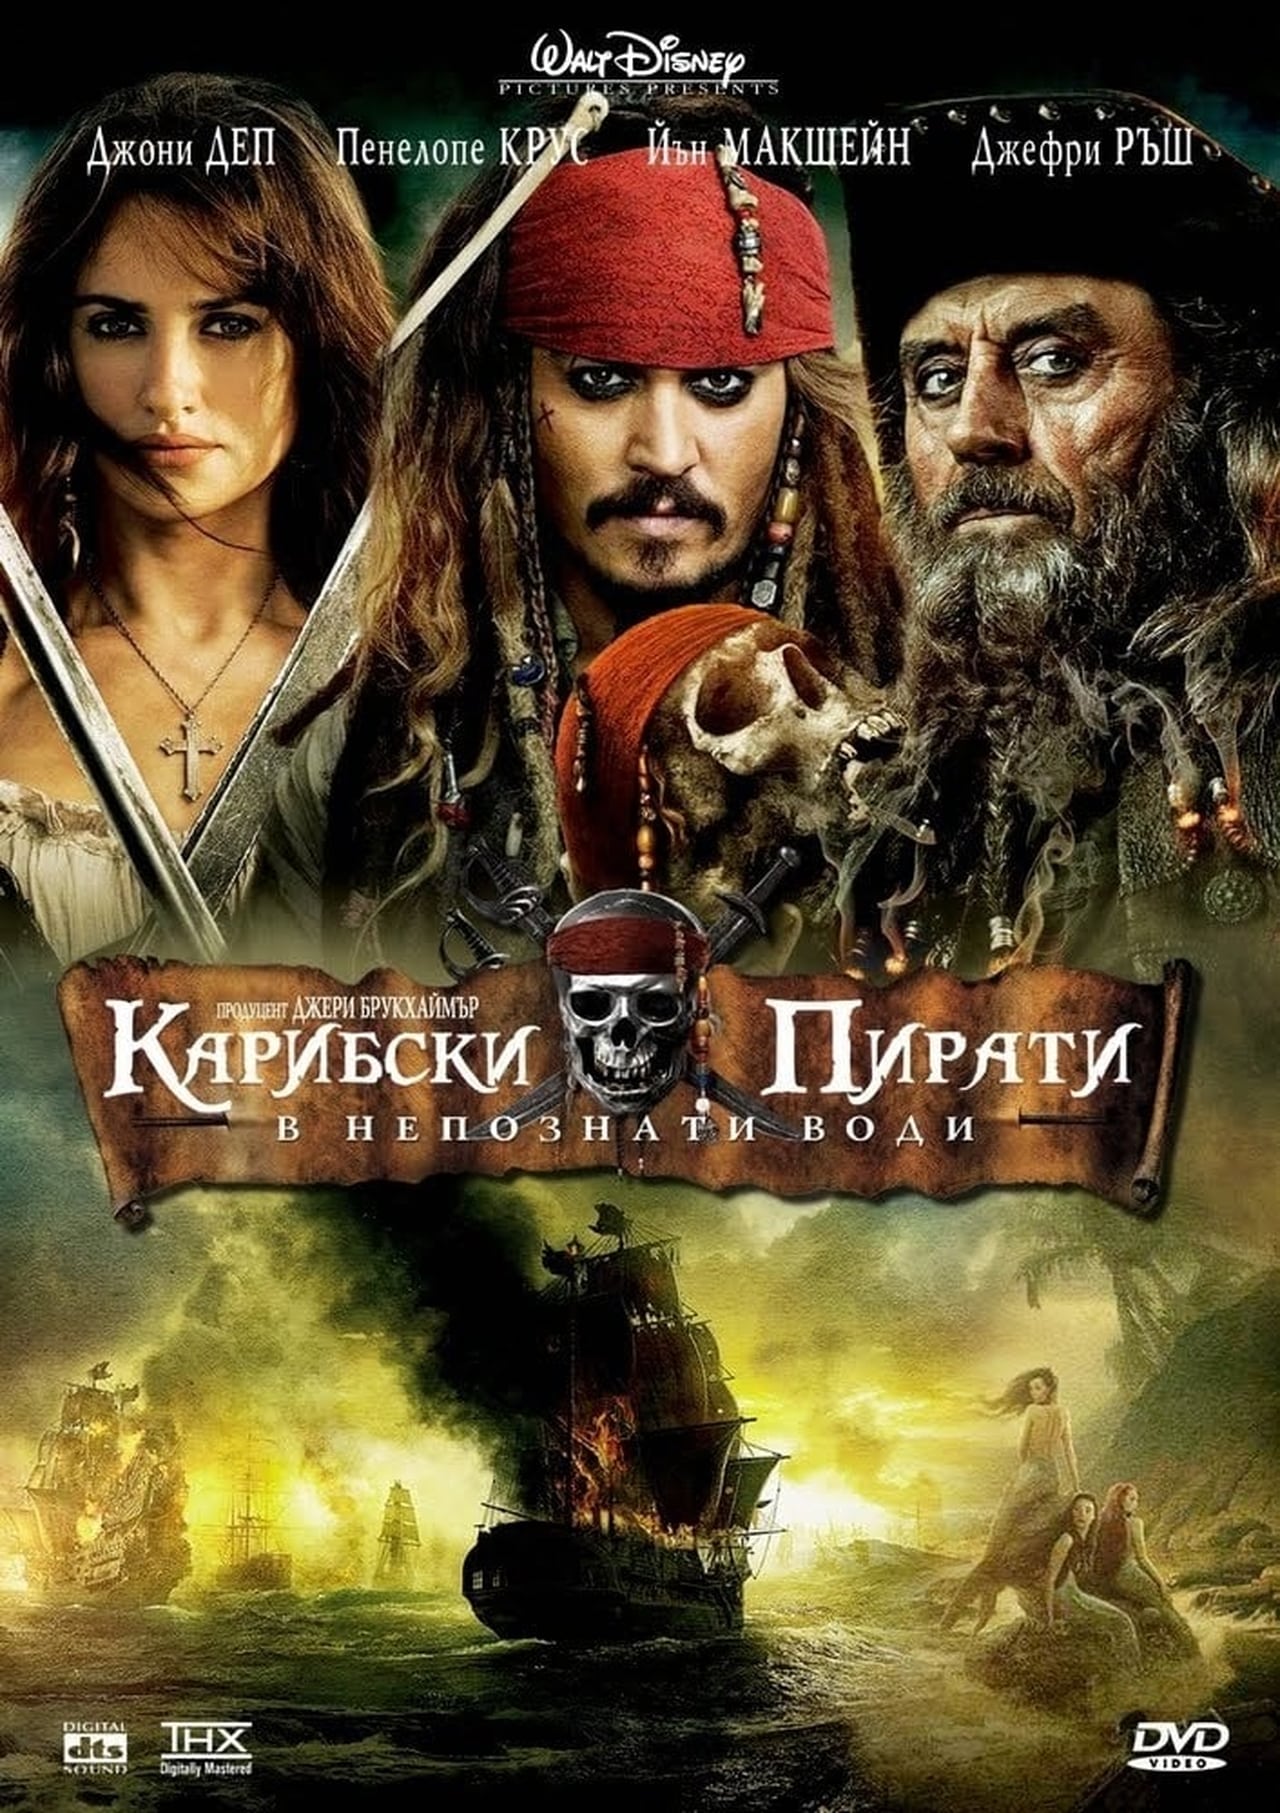 pirates of the caribbean stranger tides full movie free